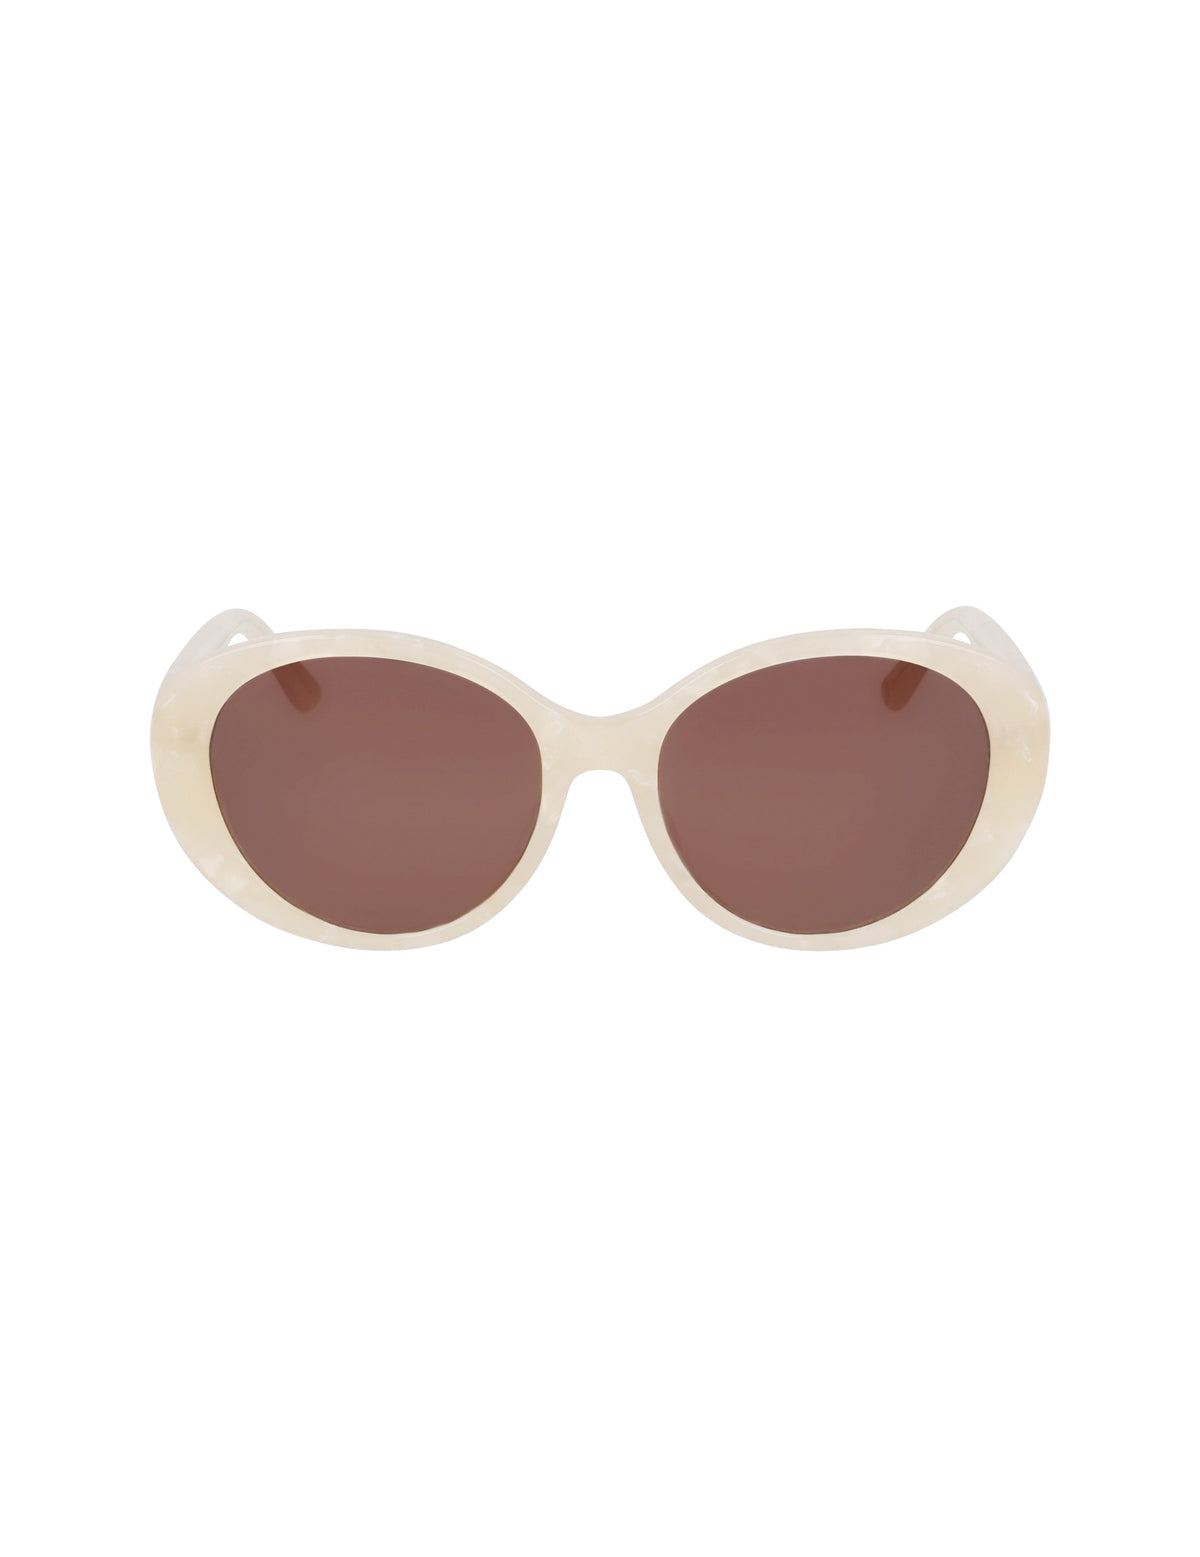 Anne Klein Ivory Pearl Glamorous Oval Sunglasses